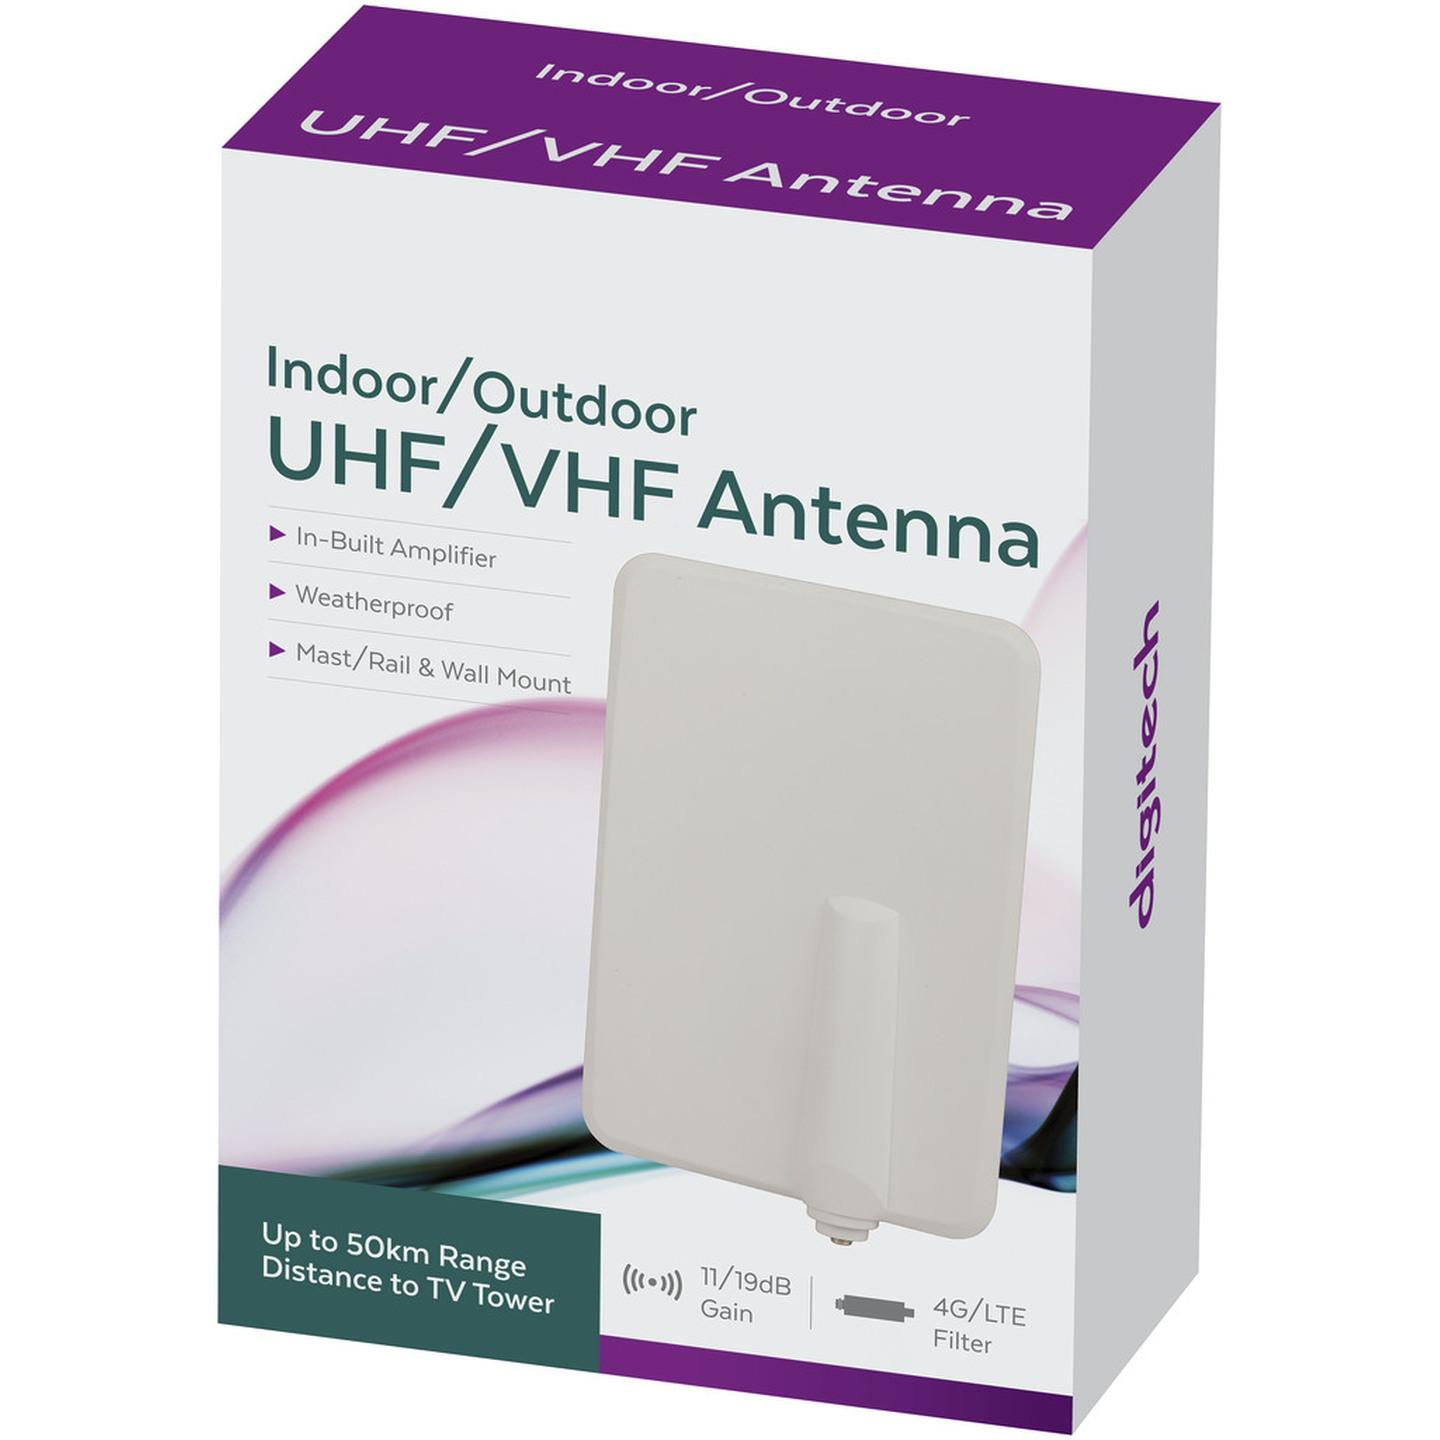 Slimline Indoor/Outdoor UHF/VHF Antenna